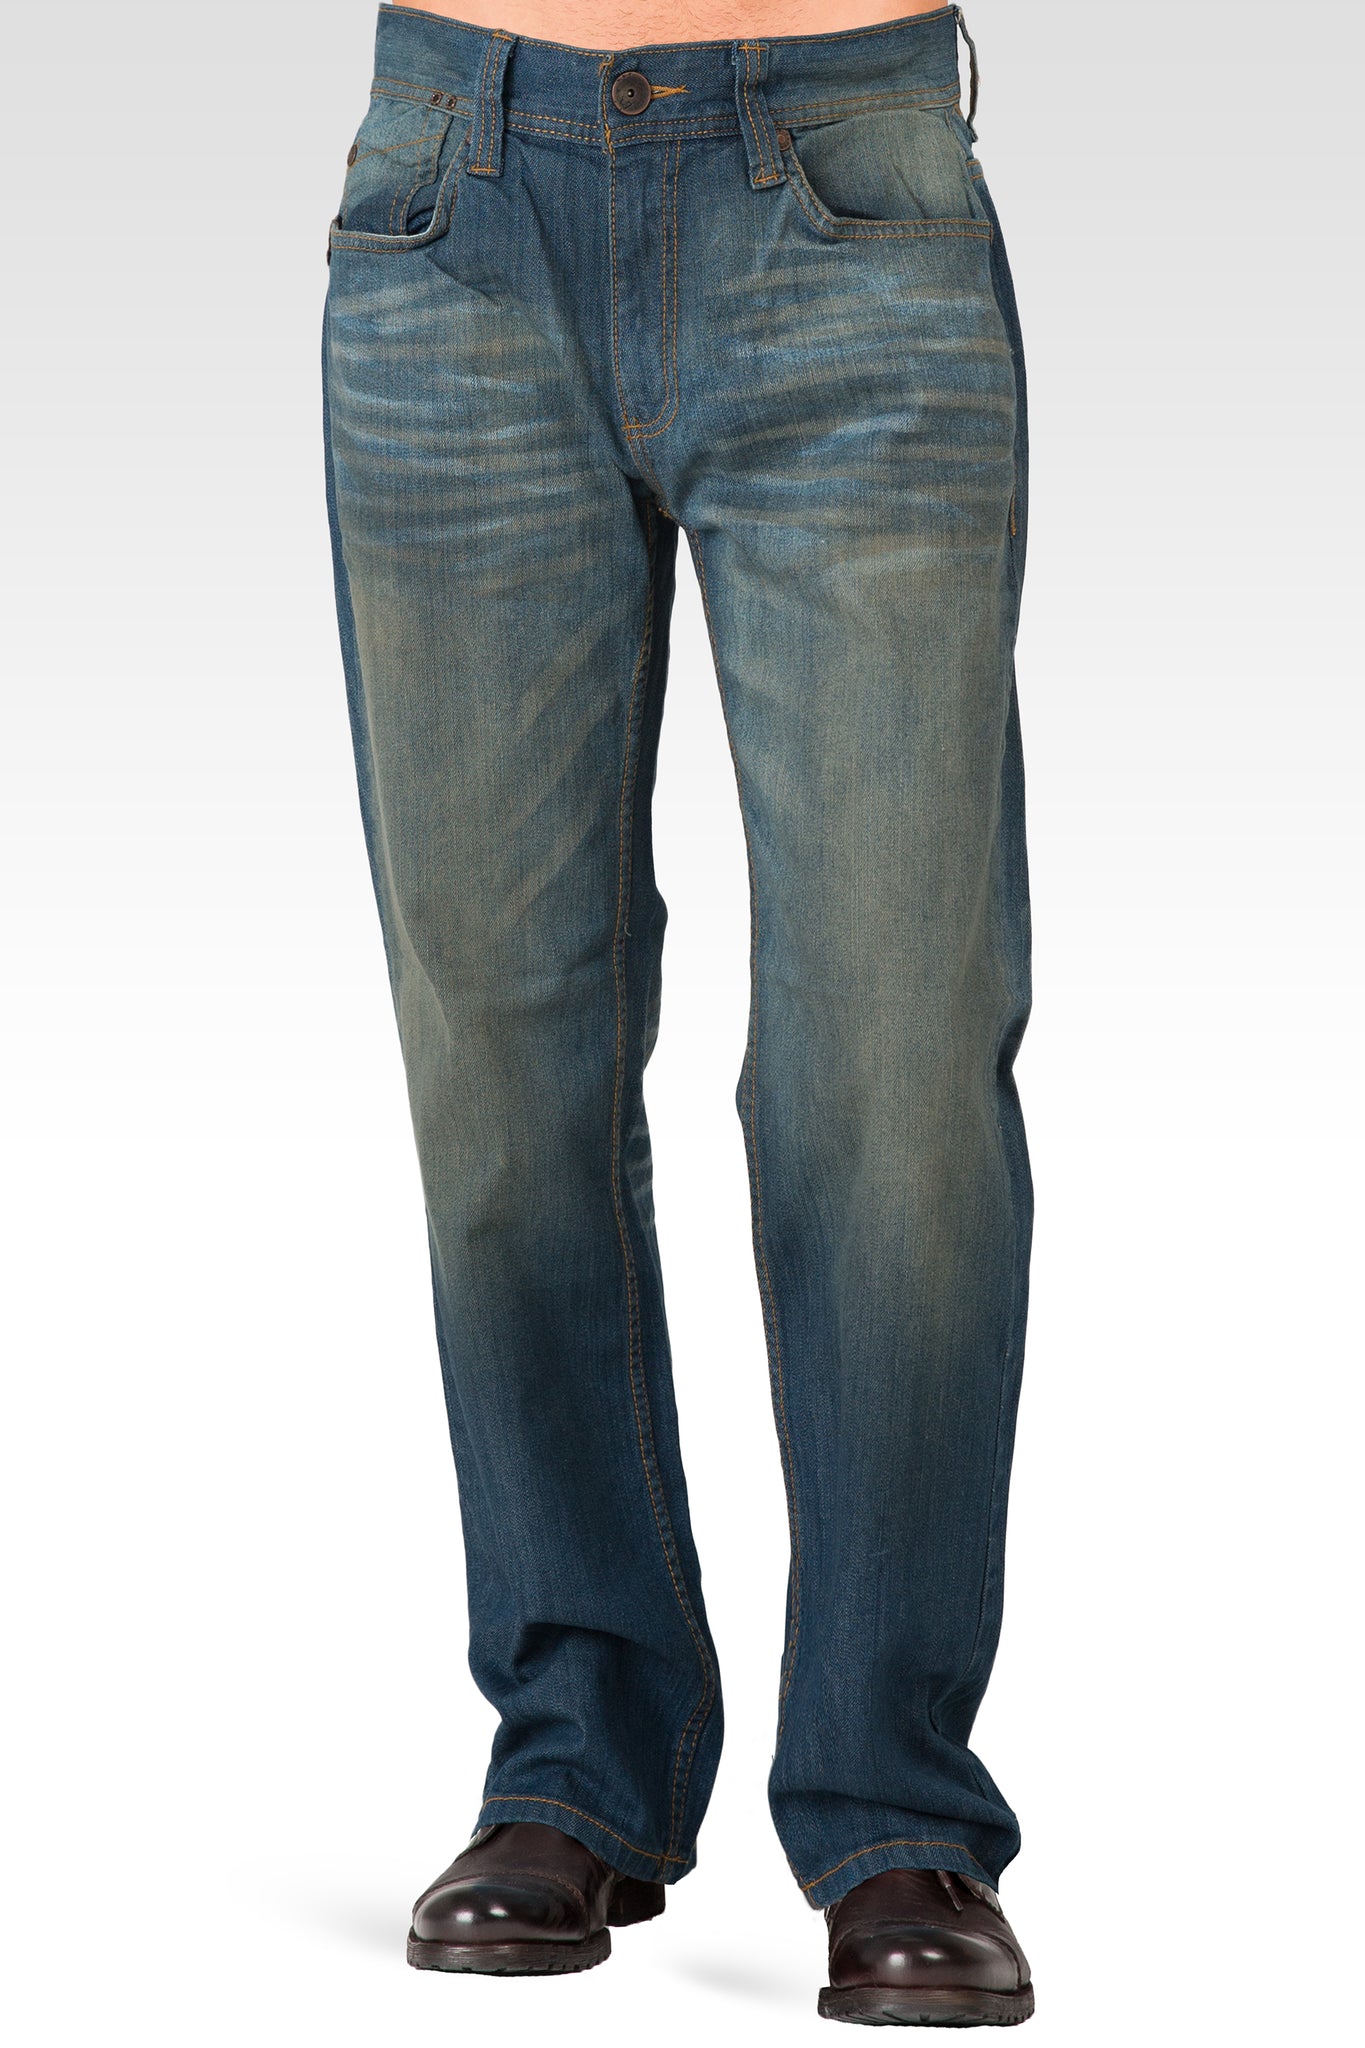 Men's Midrise Relaxed Bootcut Medium Blue Premium Vintage Wash Jeans